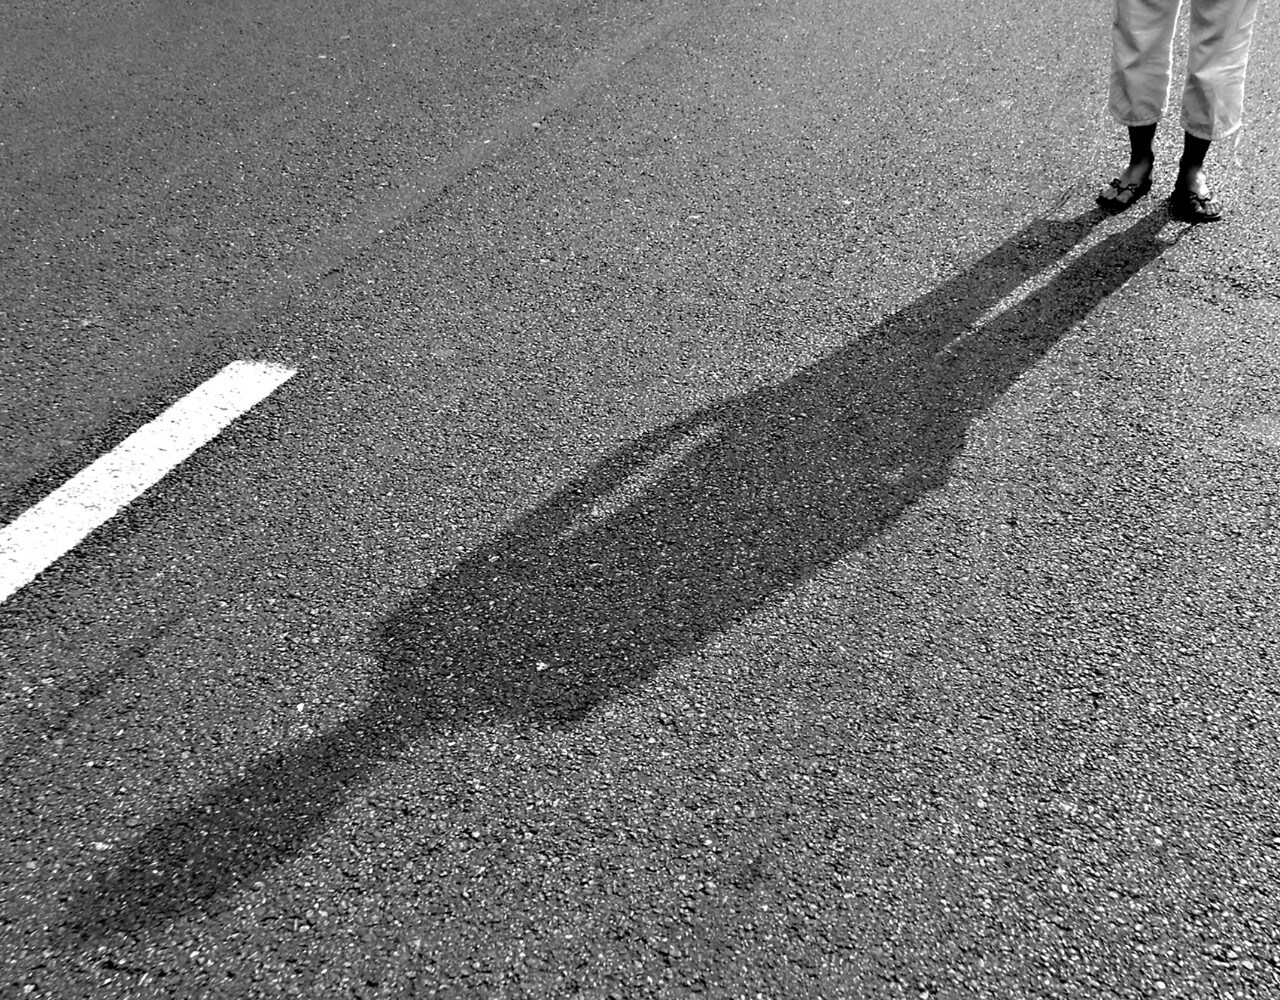 Shadow of a man. Image: Freeimages.com